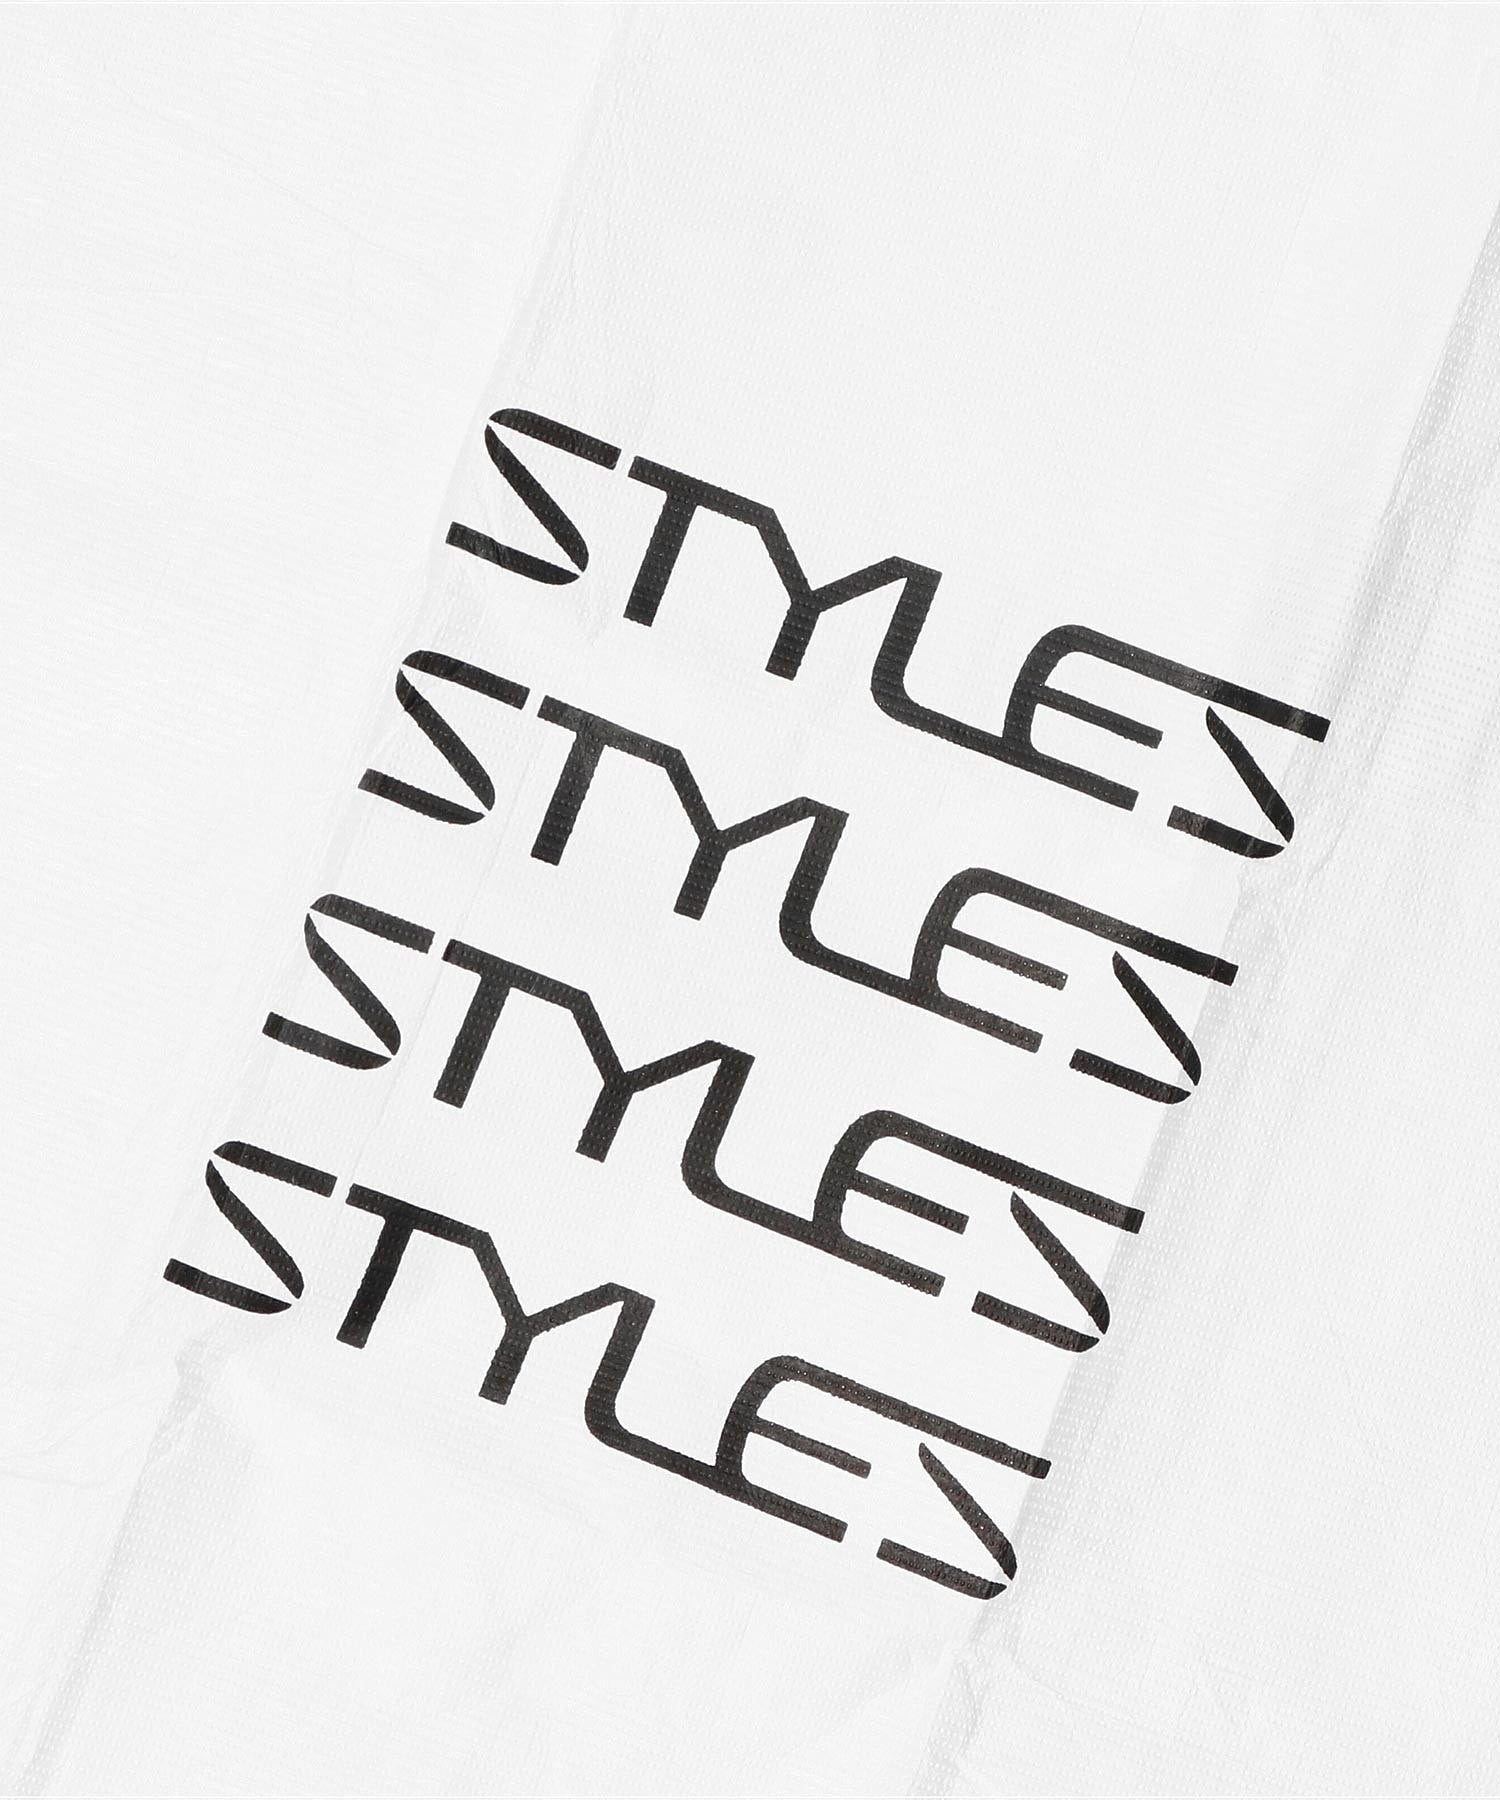 Styles/スタイルス/ TYVEK SHOPPING BAG